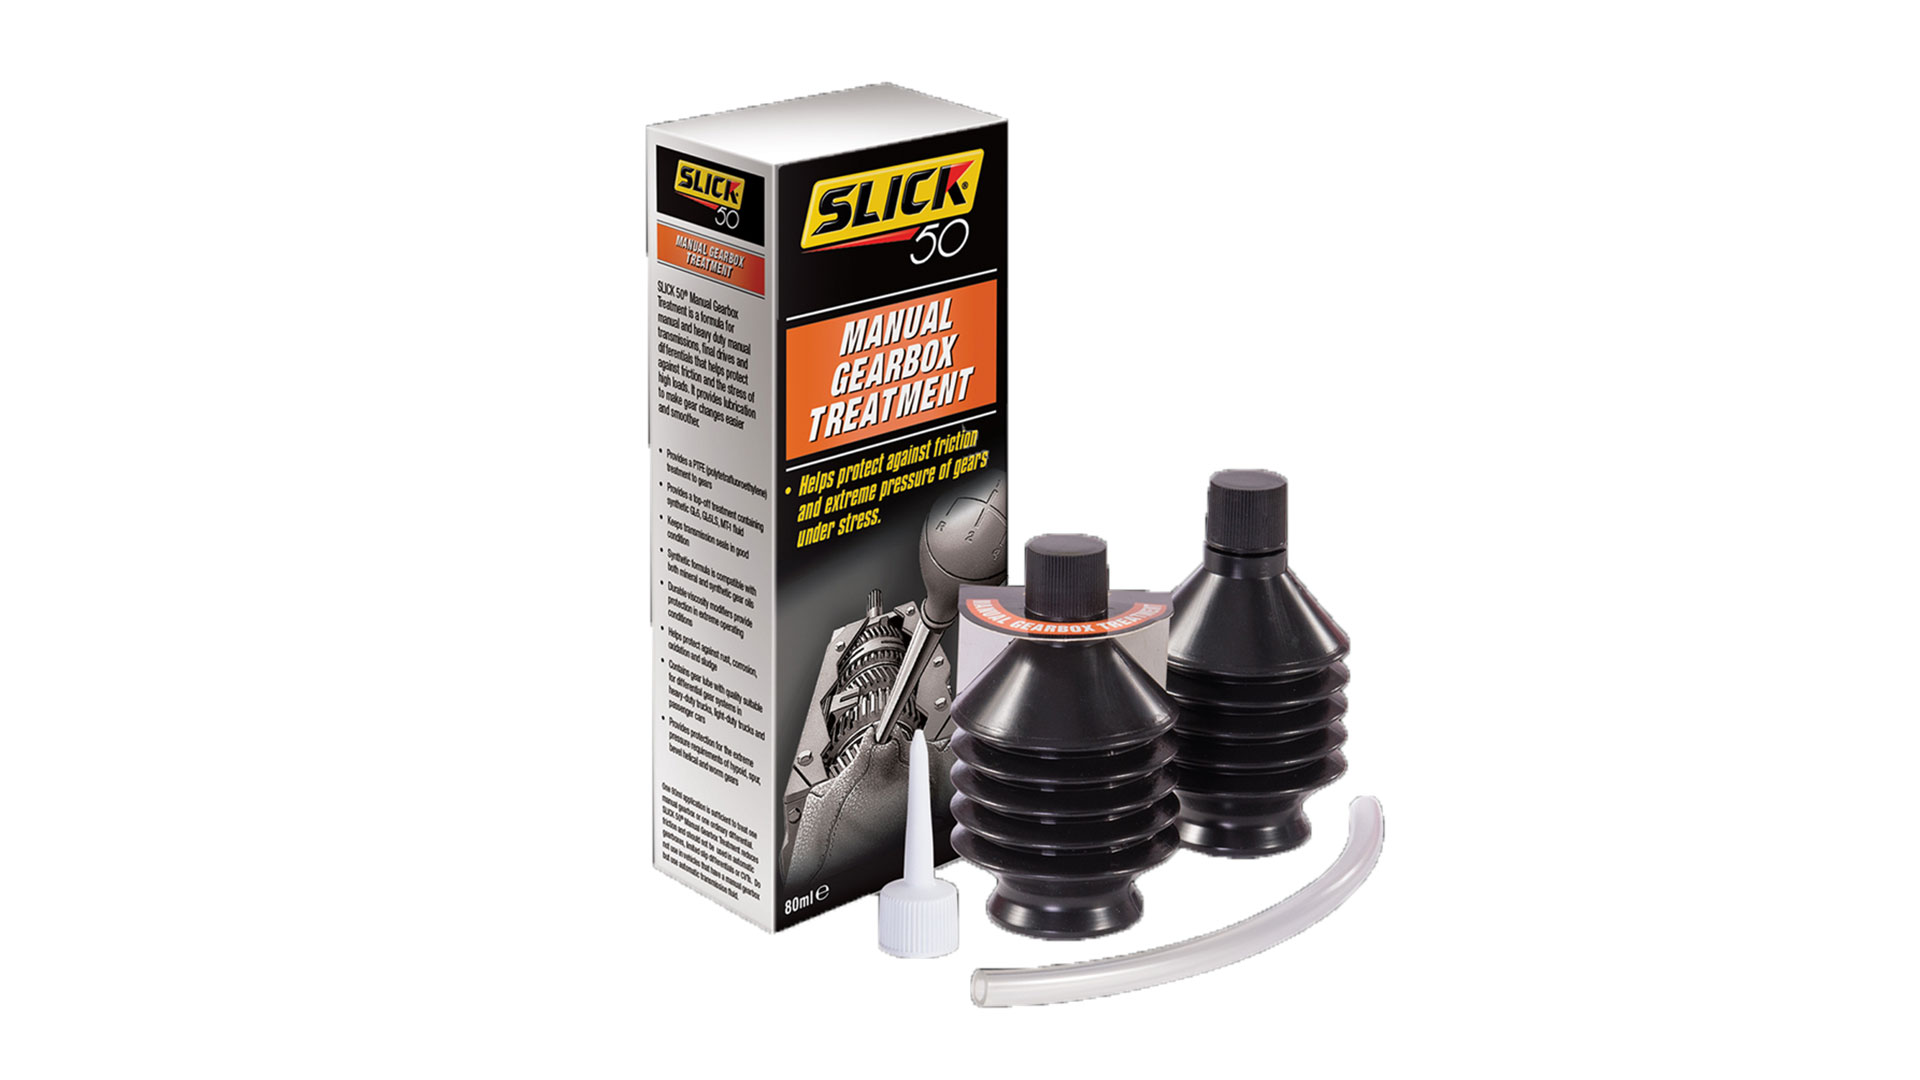 slick 50 manual gearbox treatment